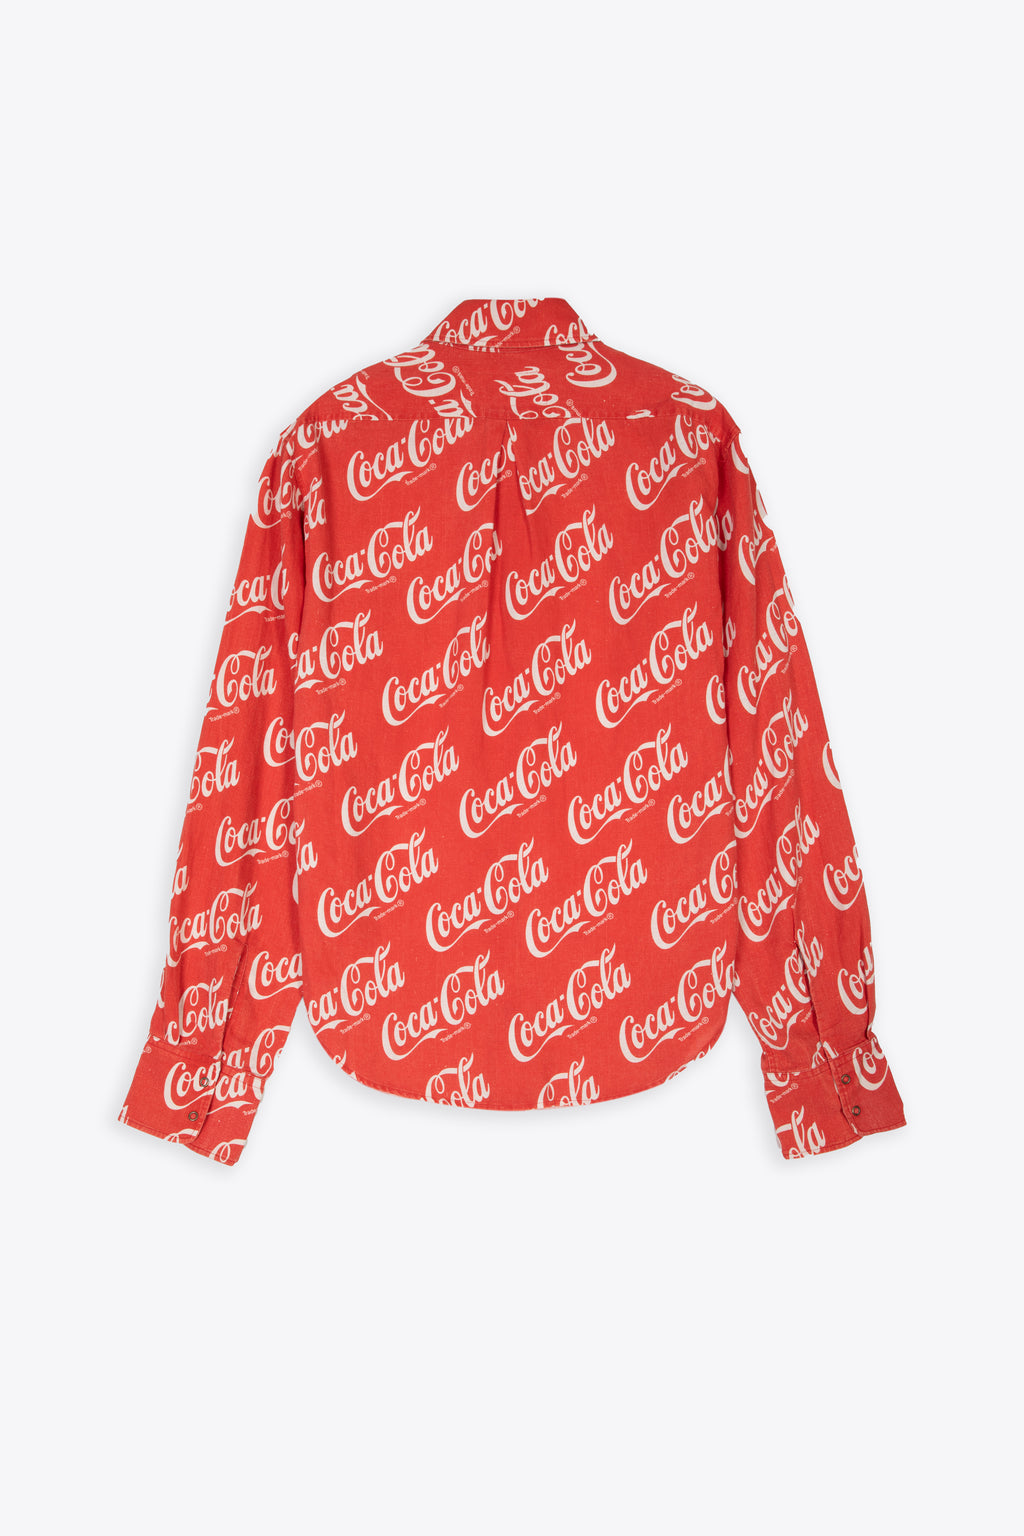 alt-image__Red-linen-blend-Coca-Cola-shirt---Unisex-Printed-Button-Up-Shirt-Woven-